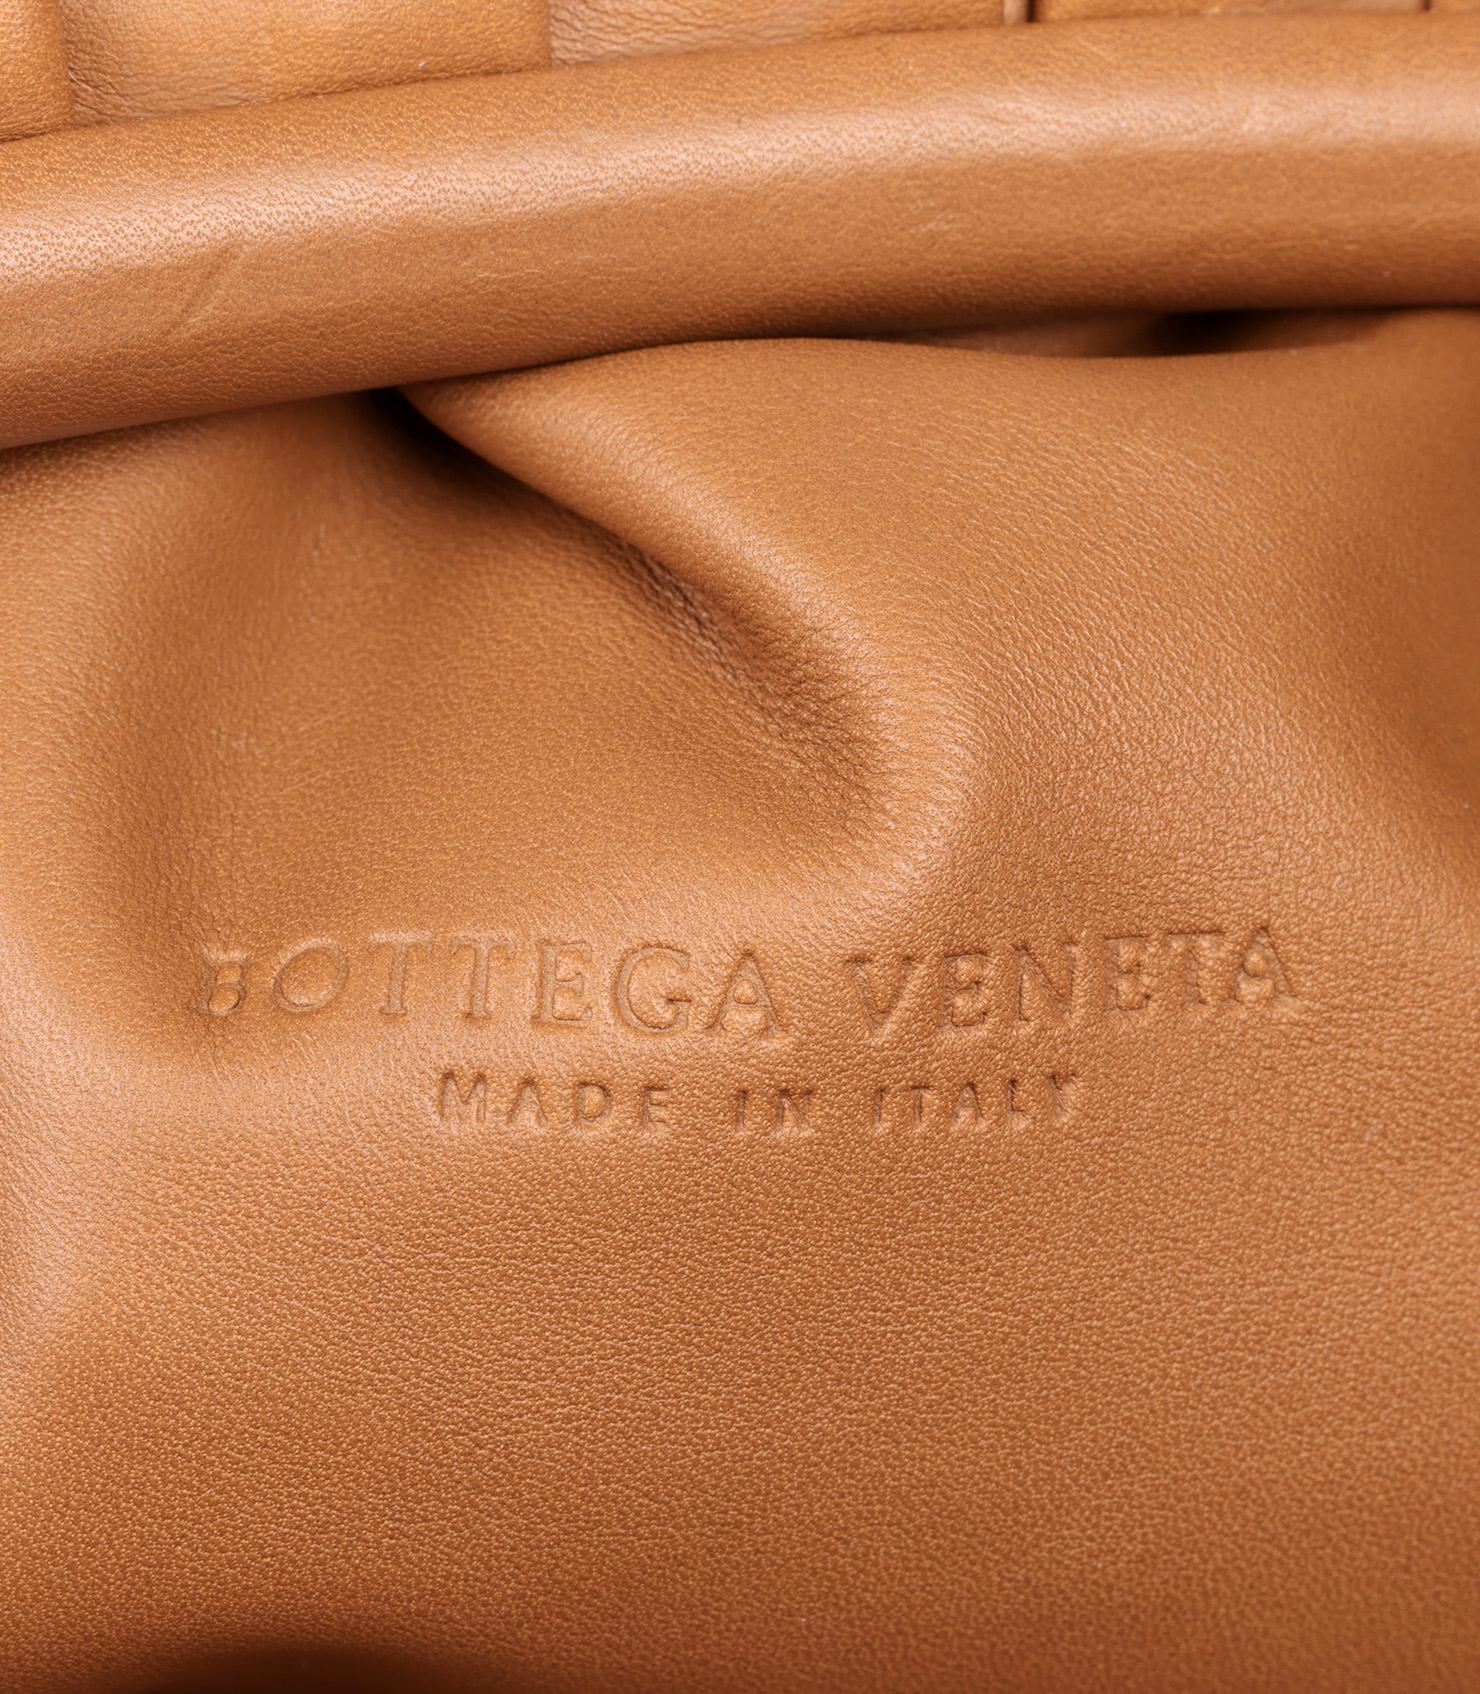 Bottega Veneta Brown Calfskin Leather Large The Pouch For Sale 4